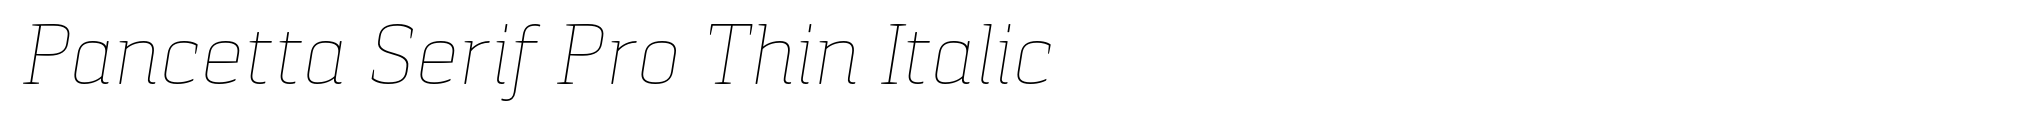 Pancetta Serif Pro Thin Italic image